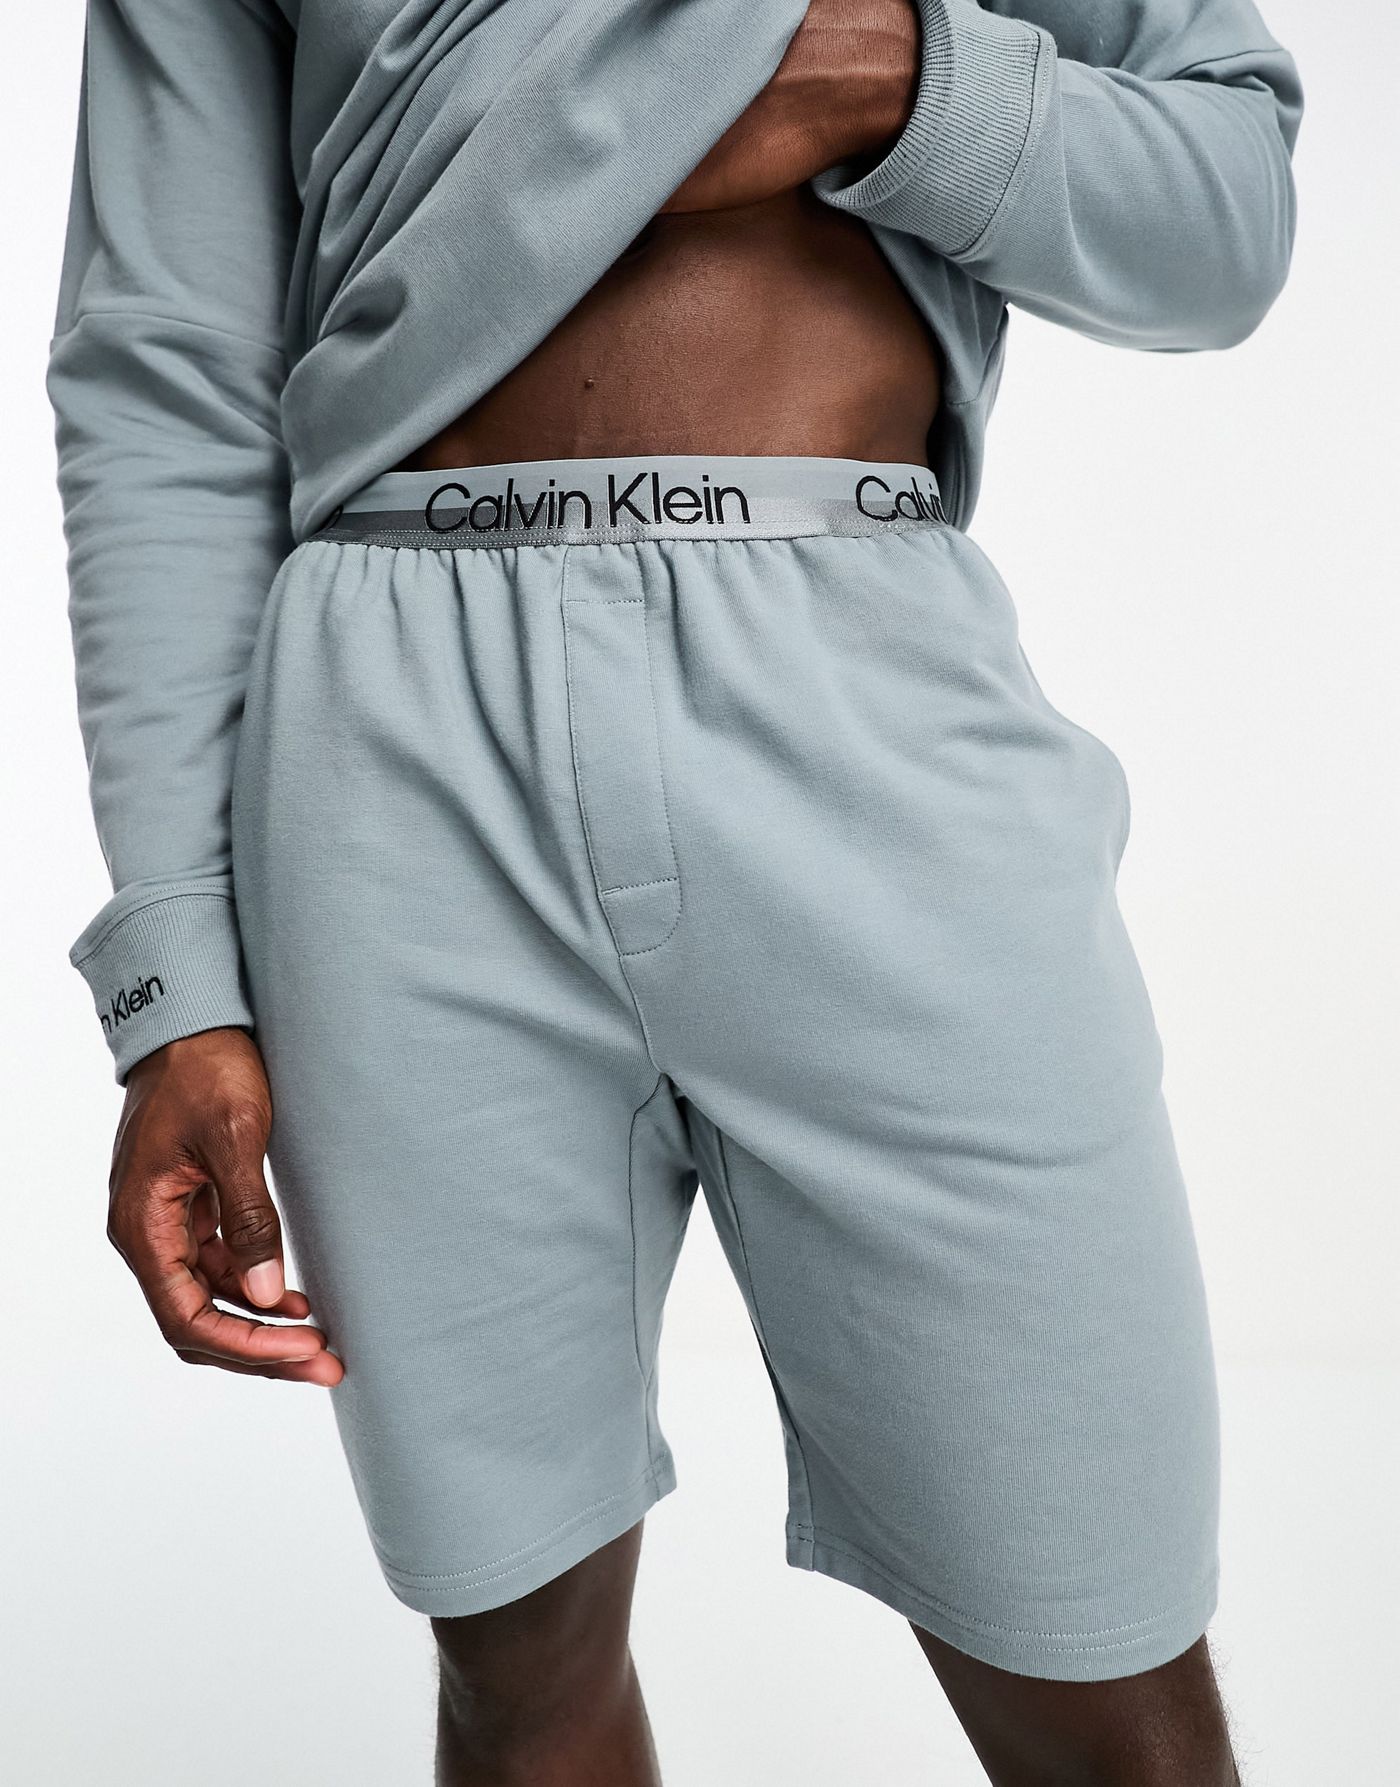 Calvin Klein sleep shorts in blue